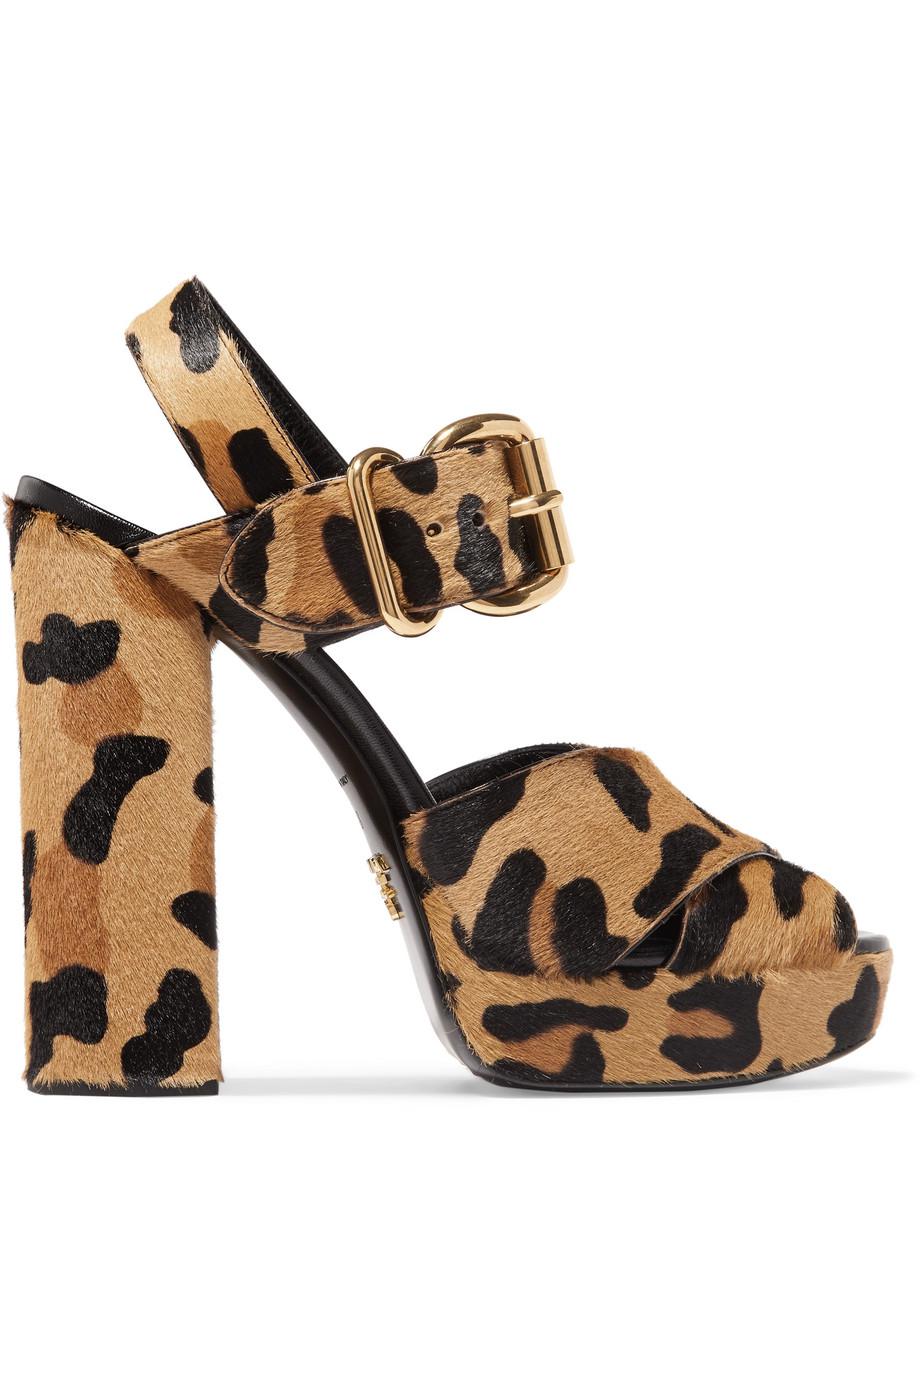 prada leopard sandals